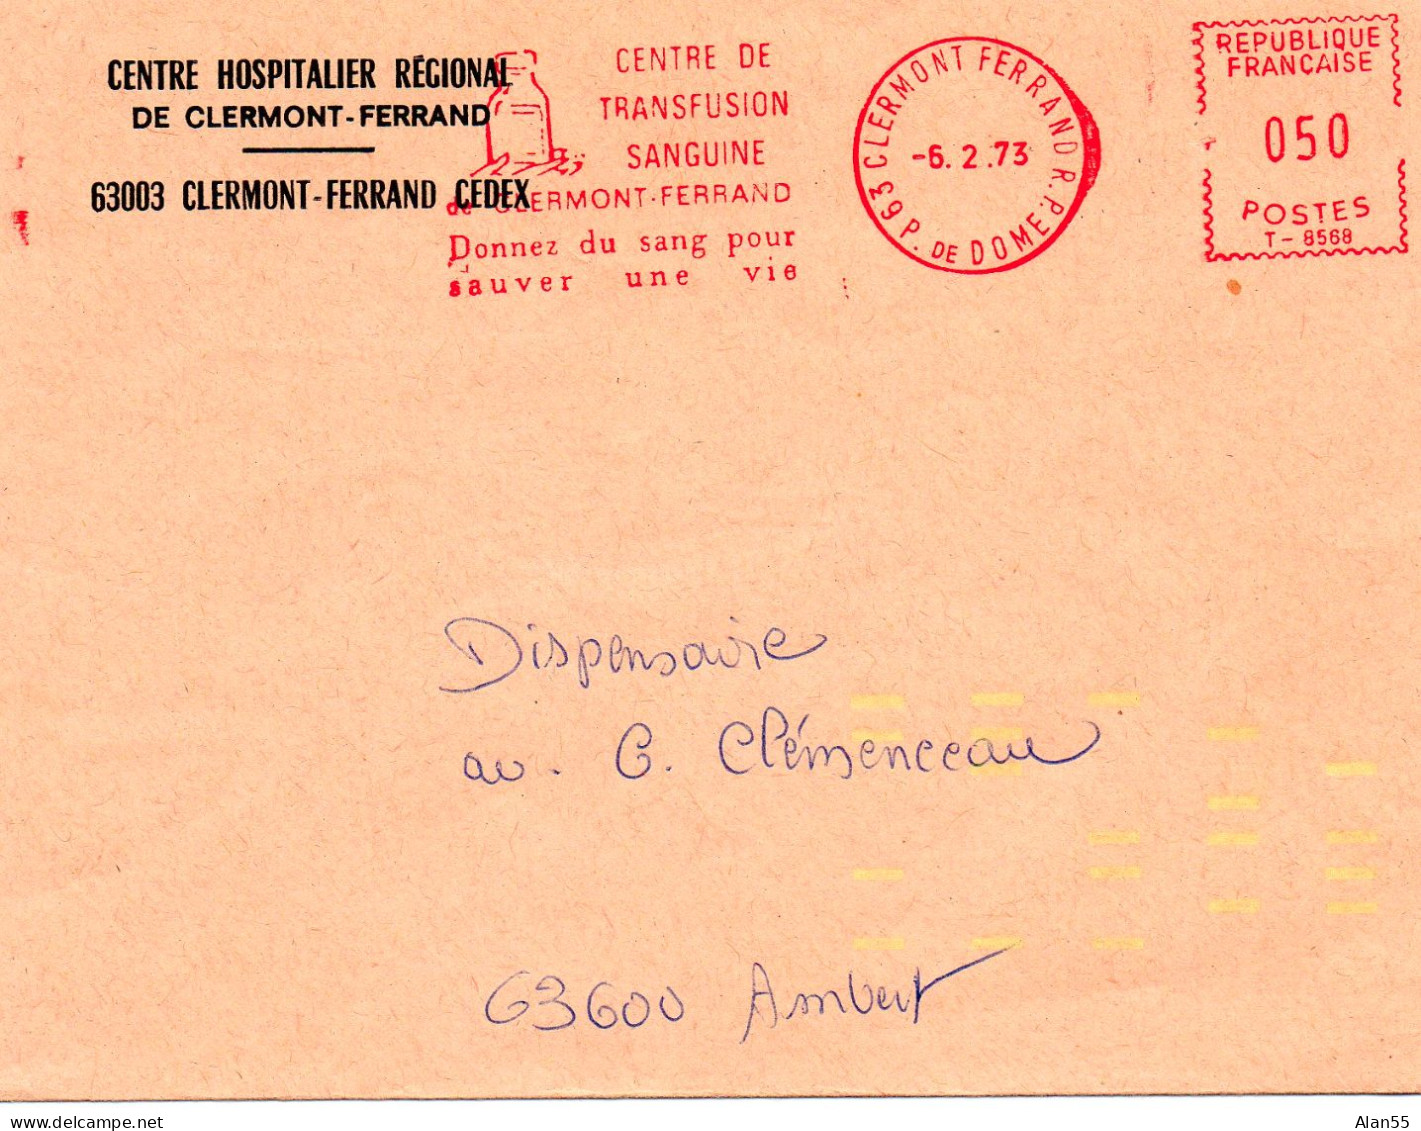 FRANCE.1956. " TRANSFUSION SANGUINE". MARQUE JAUNE INDEXATION COURRIER. - EHBO